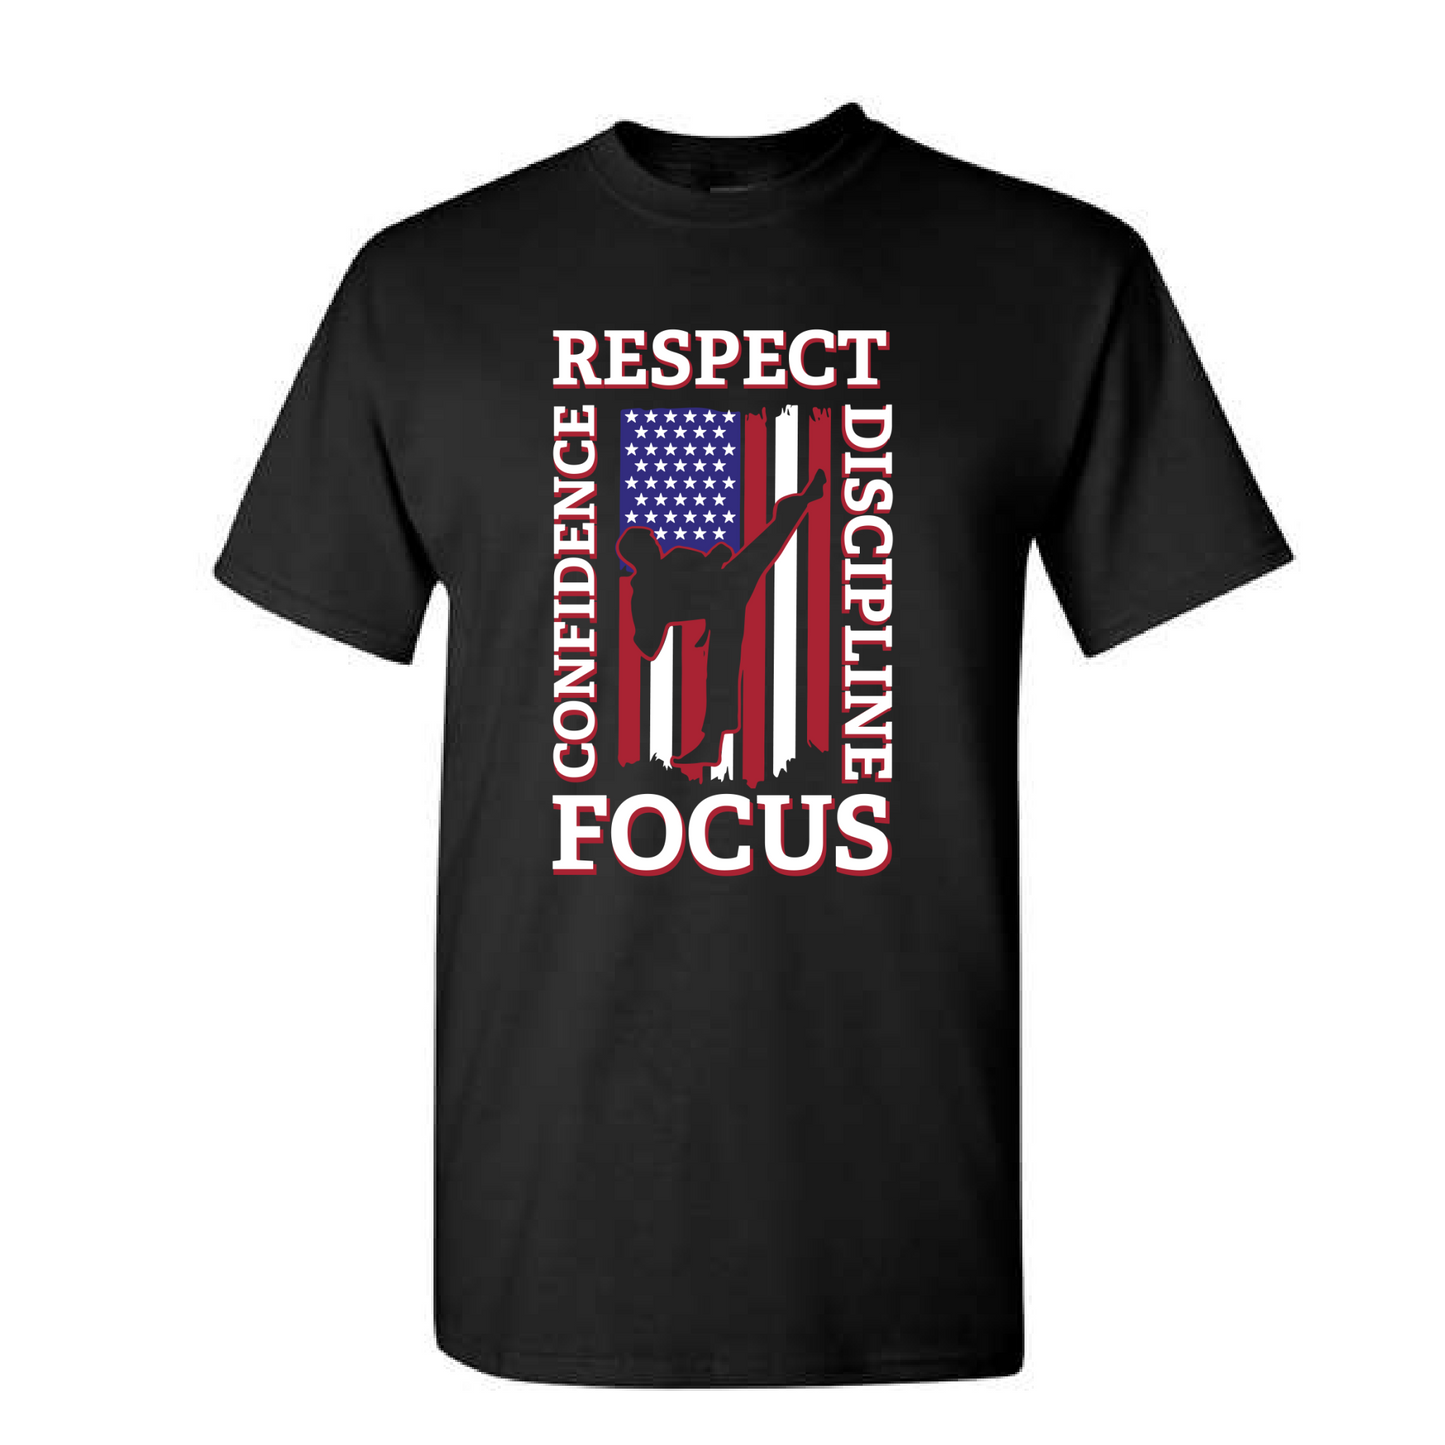 American Flag Values T-Shirt